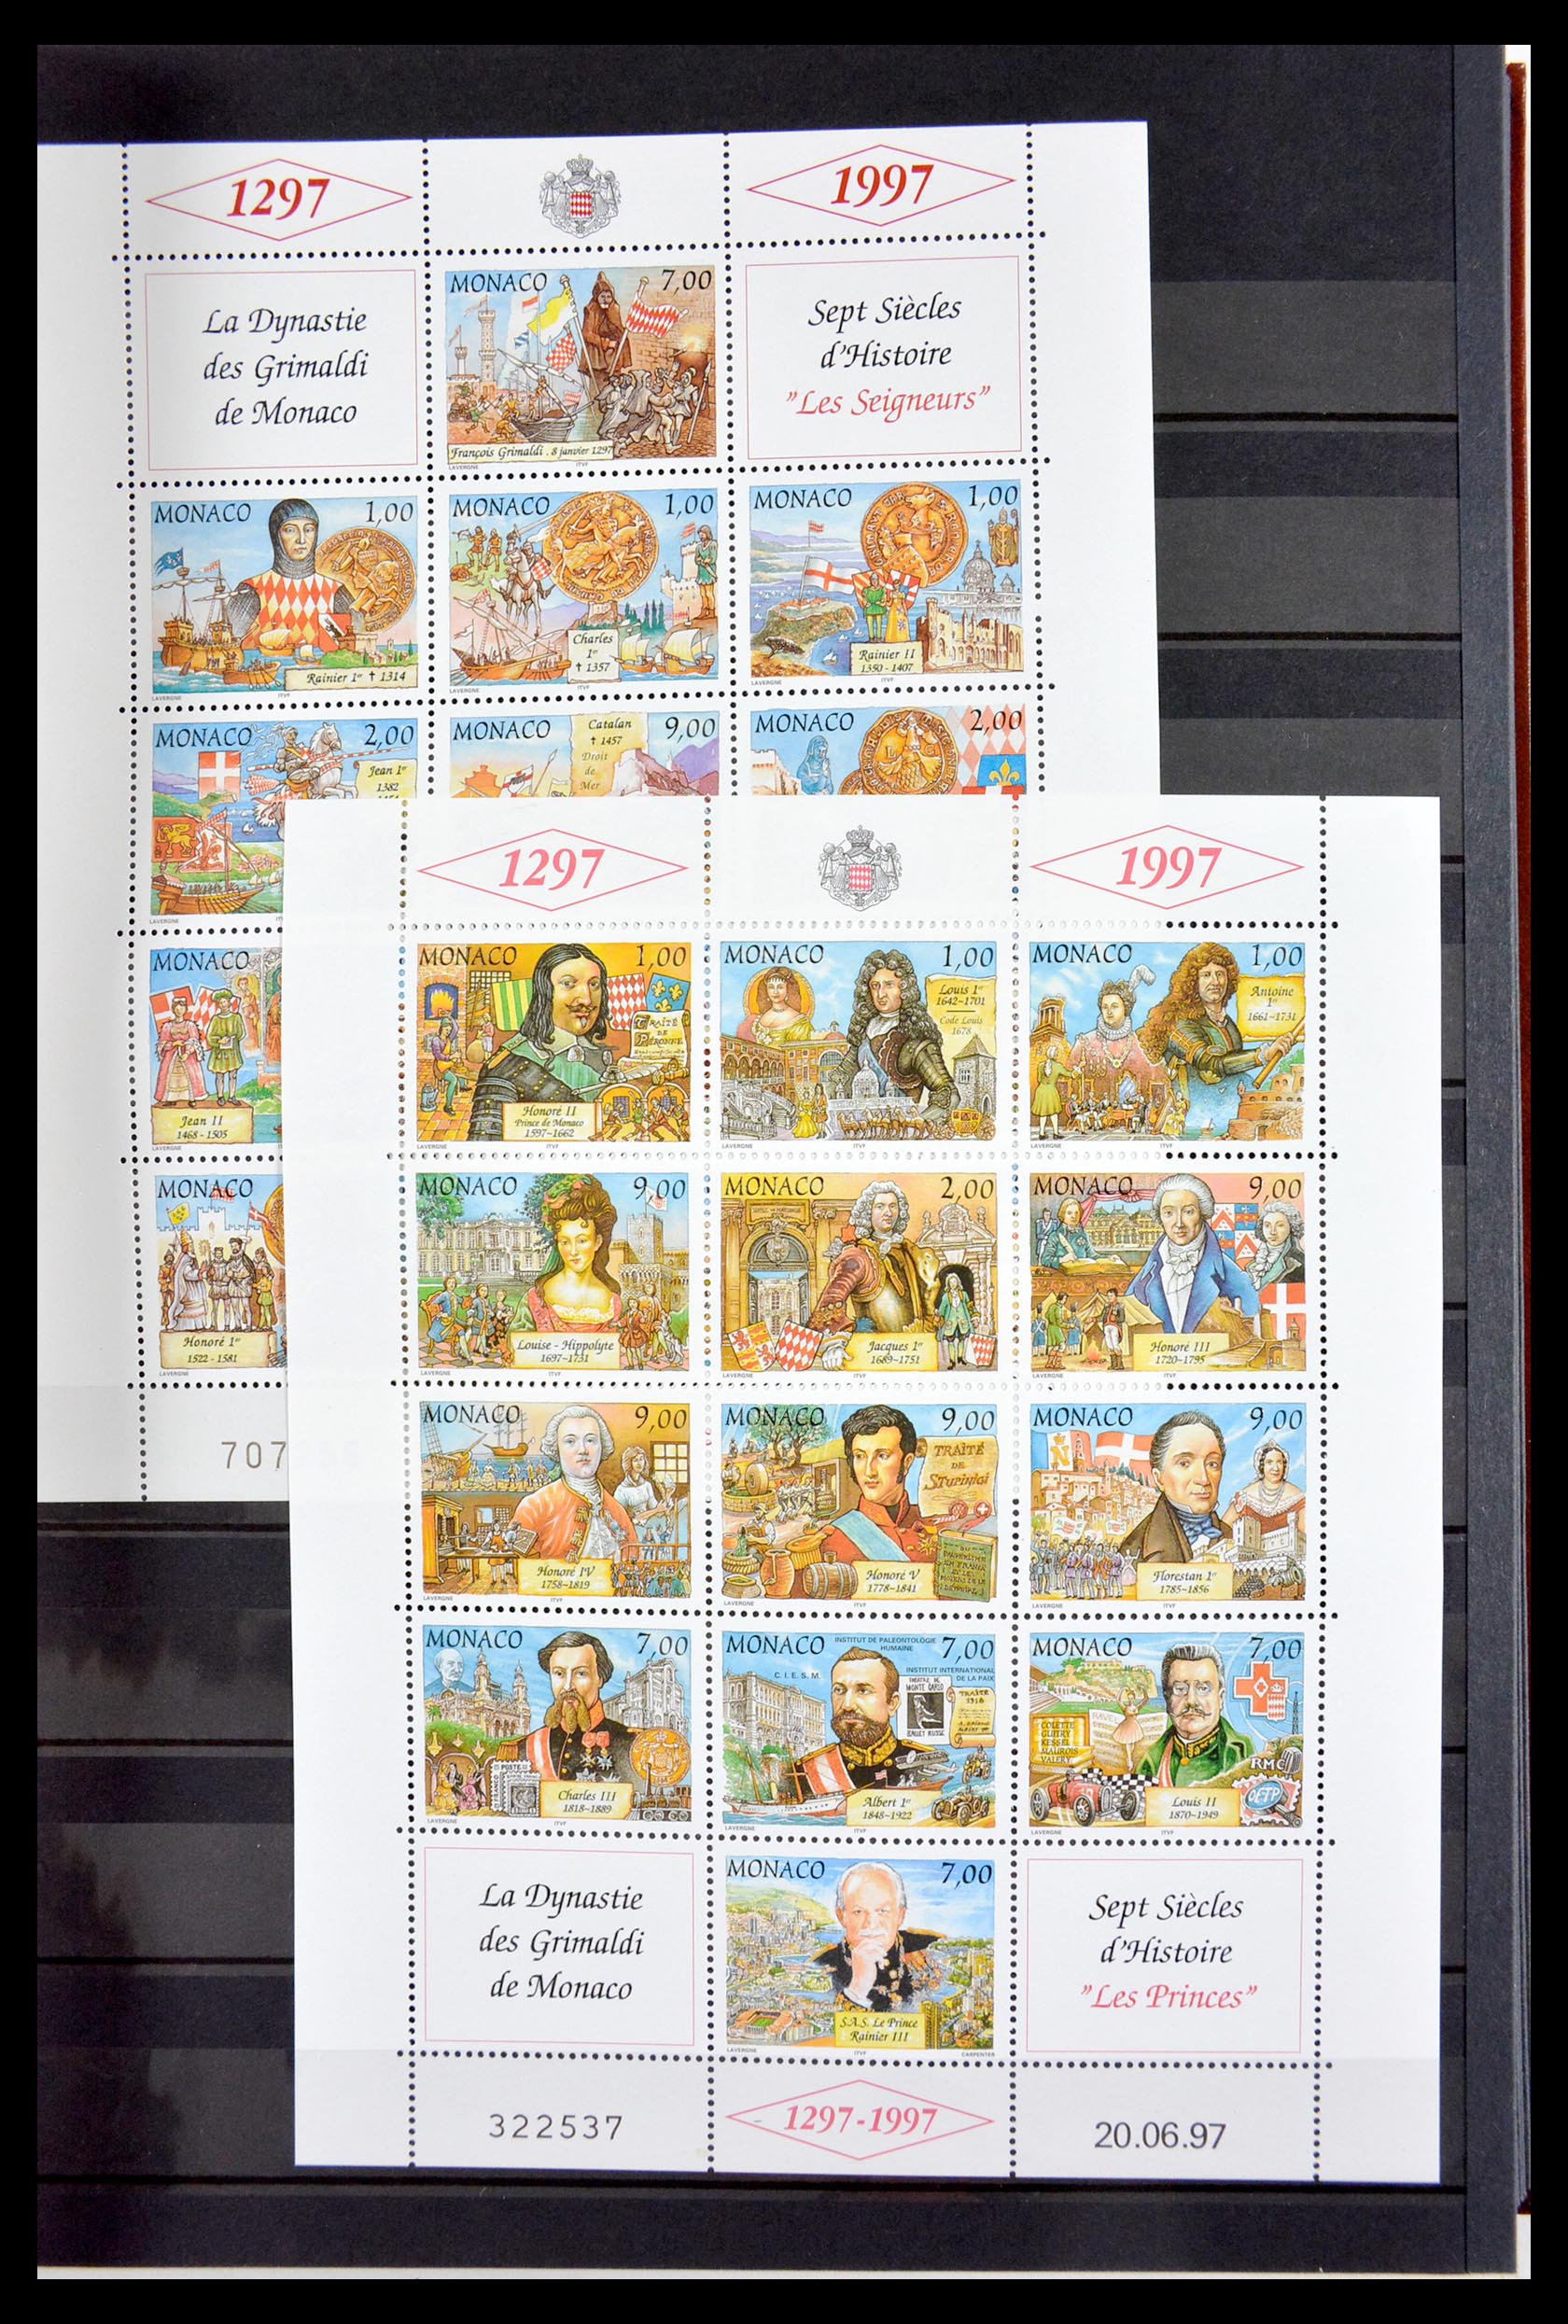 29584 023 - 29584 World souvenir sheets 1980-2011.